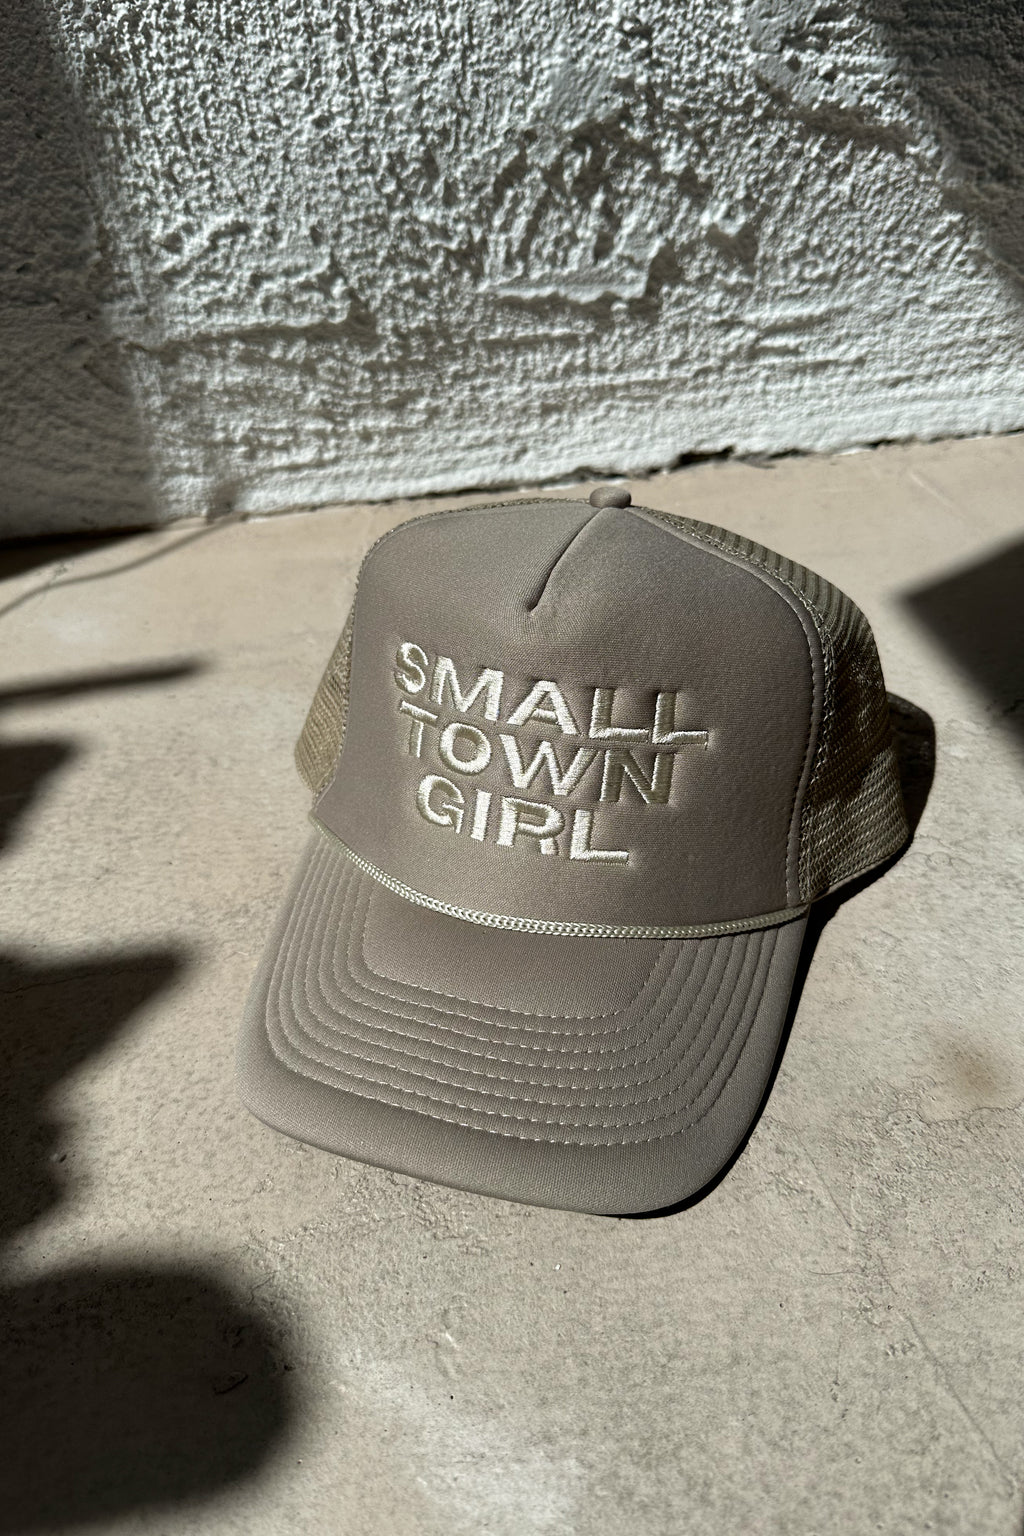 Small Town Girl Trucker Hat